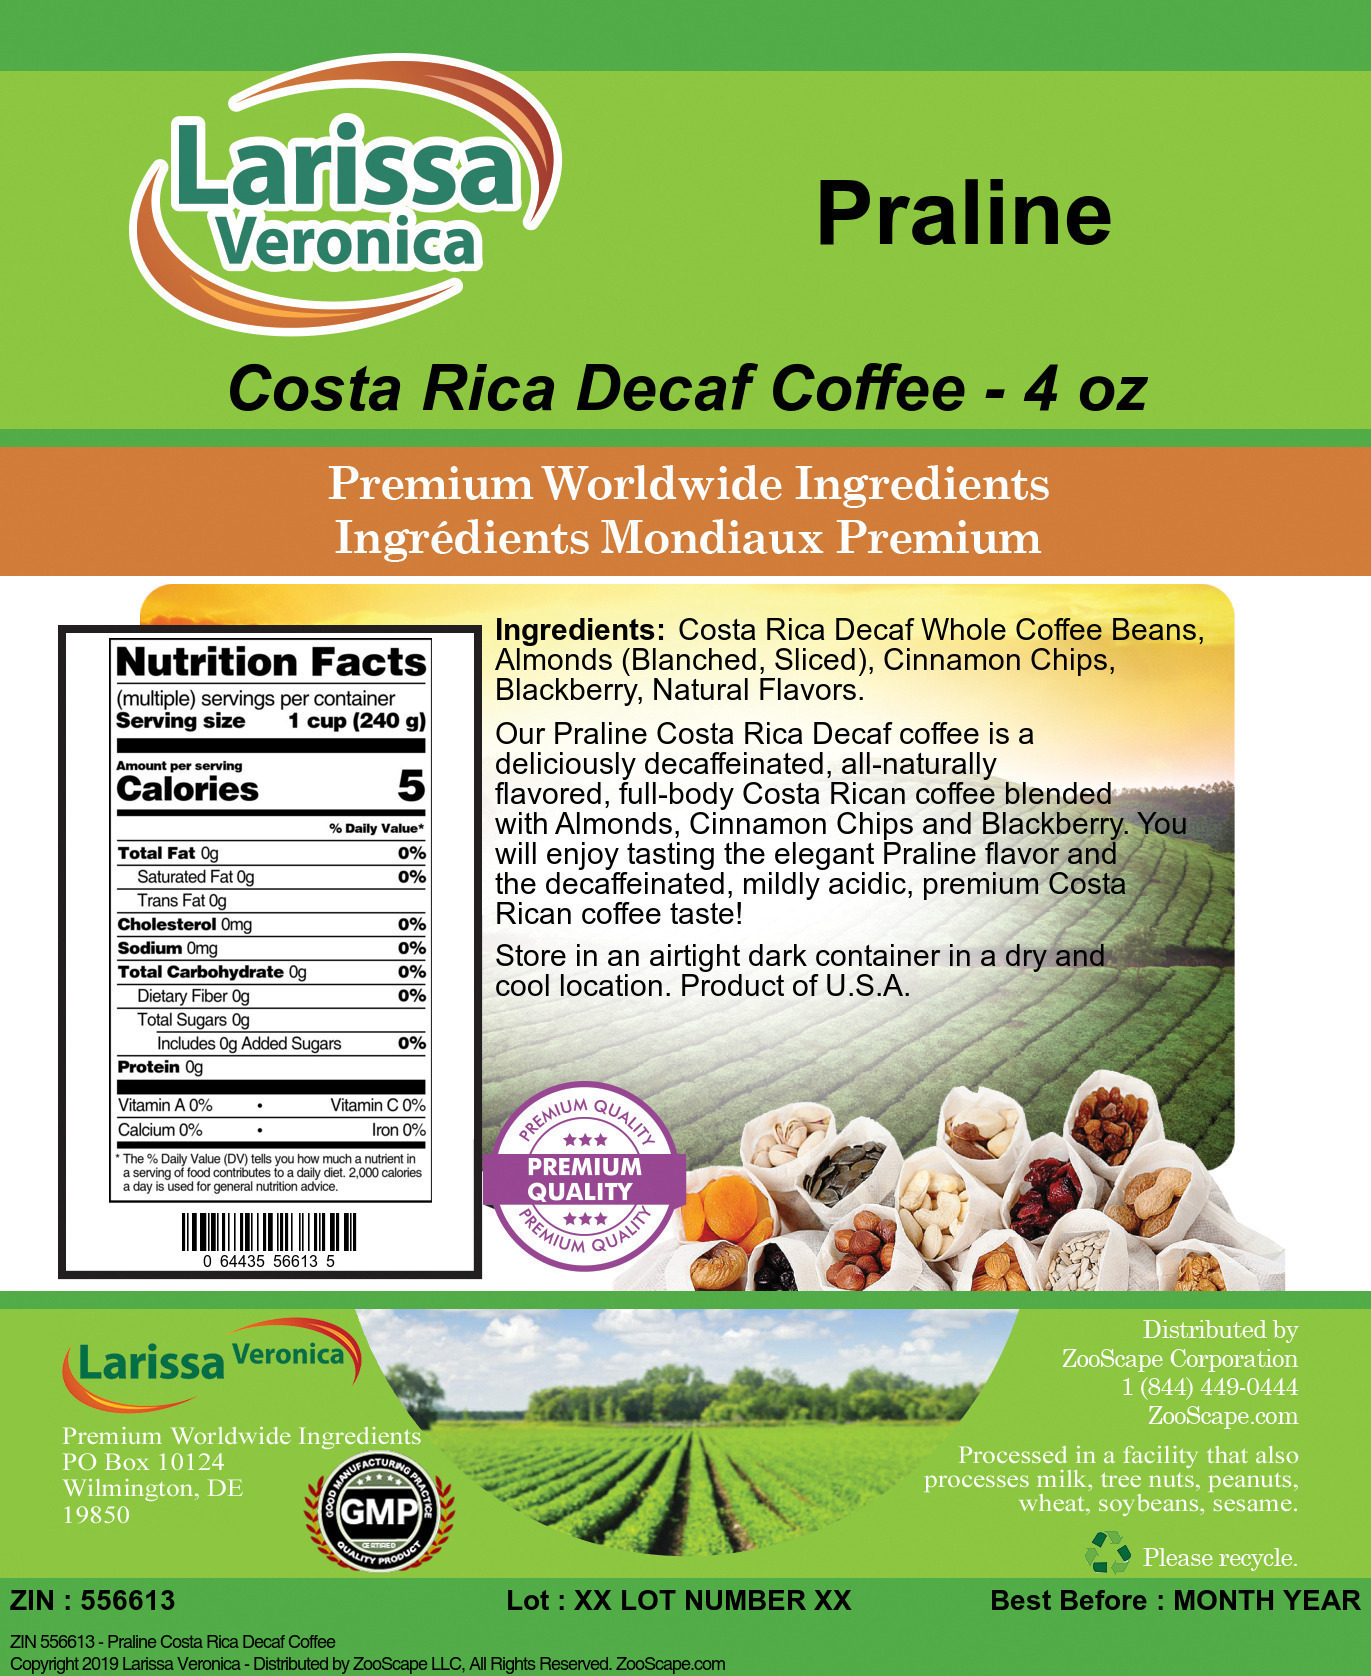 Praline Costa Rica Decaf Coffee - Label